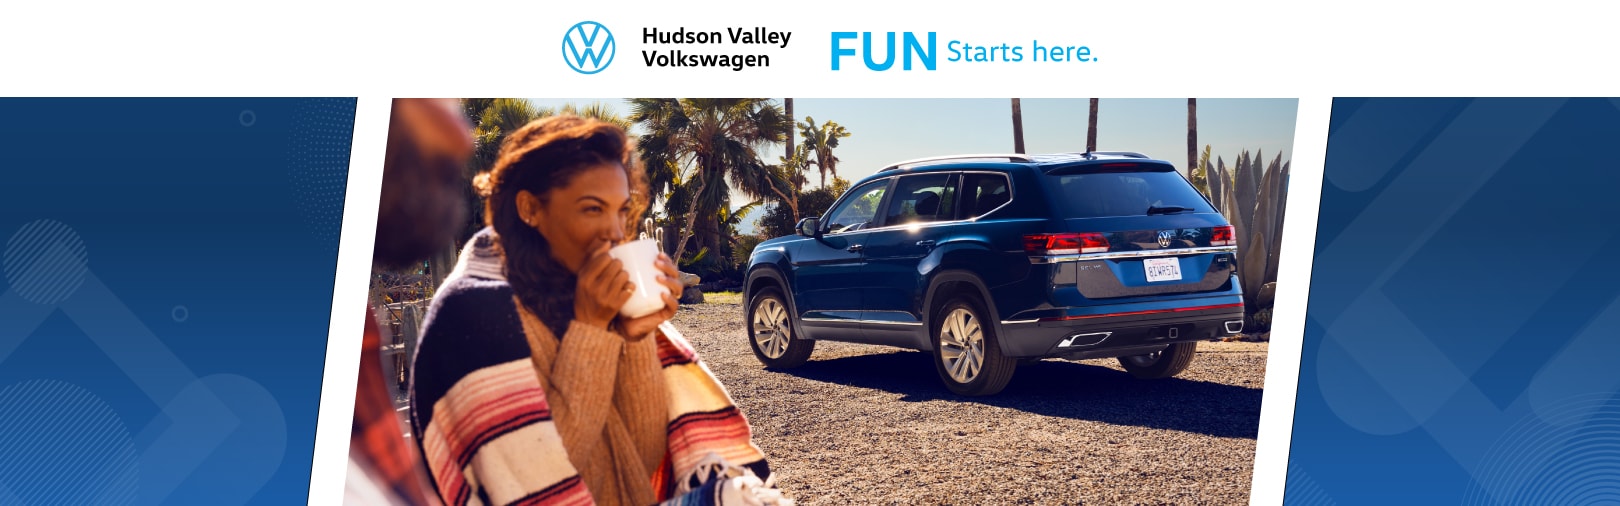 Hudson Valley Volkswagen Reviews Image